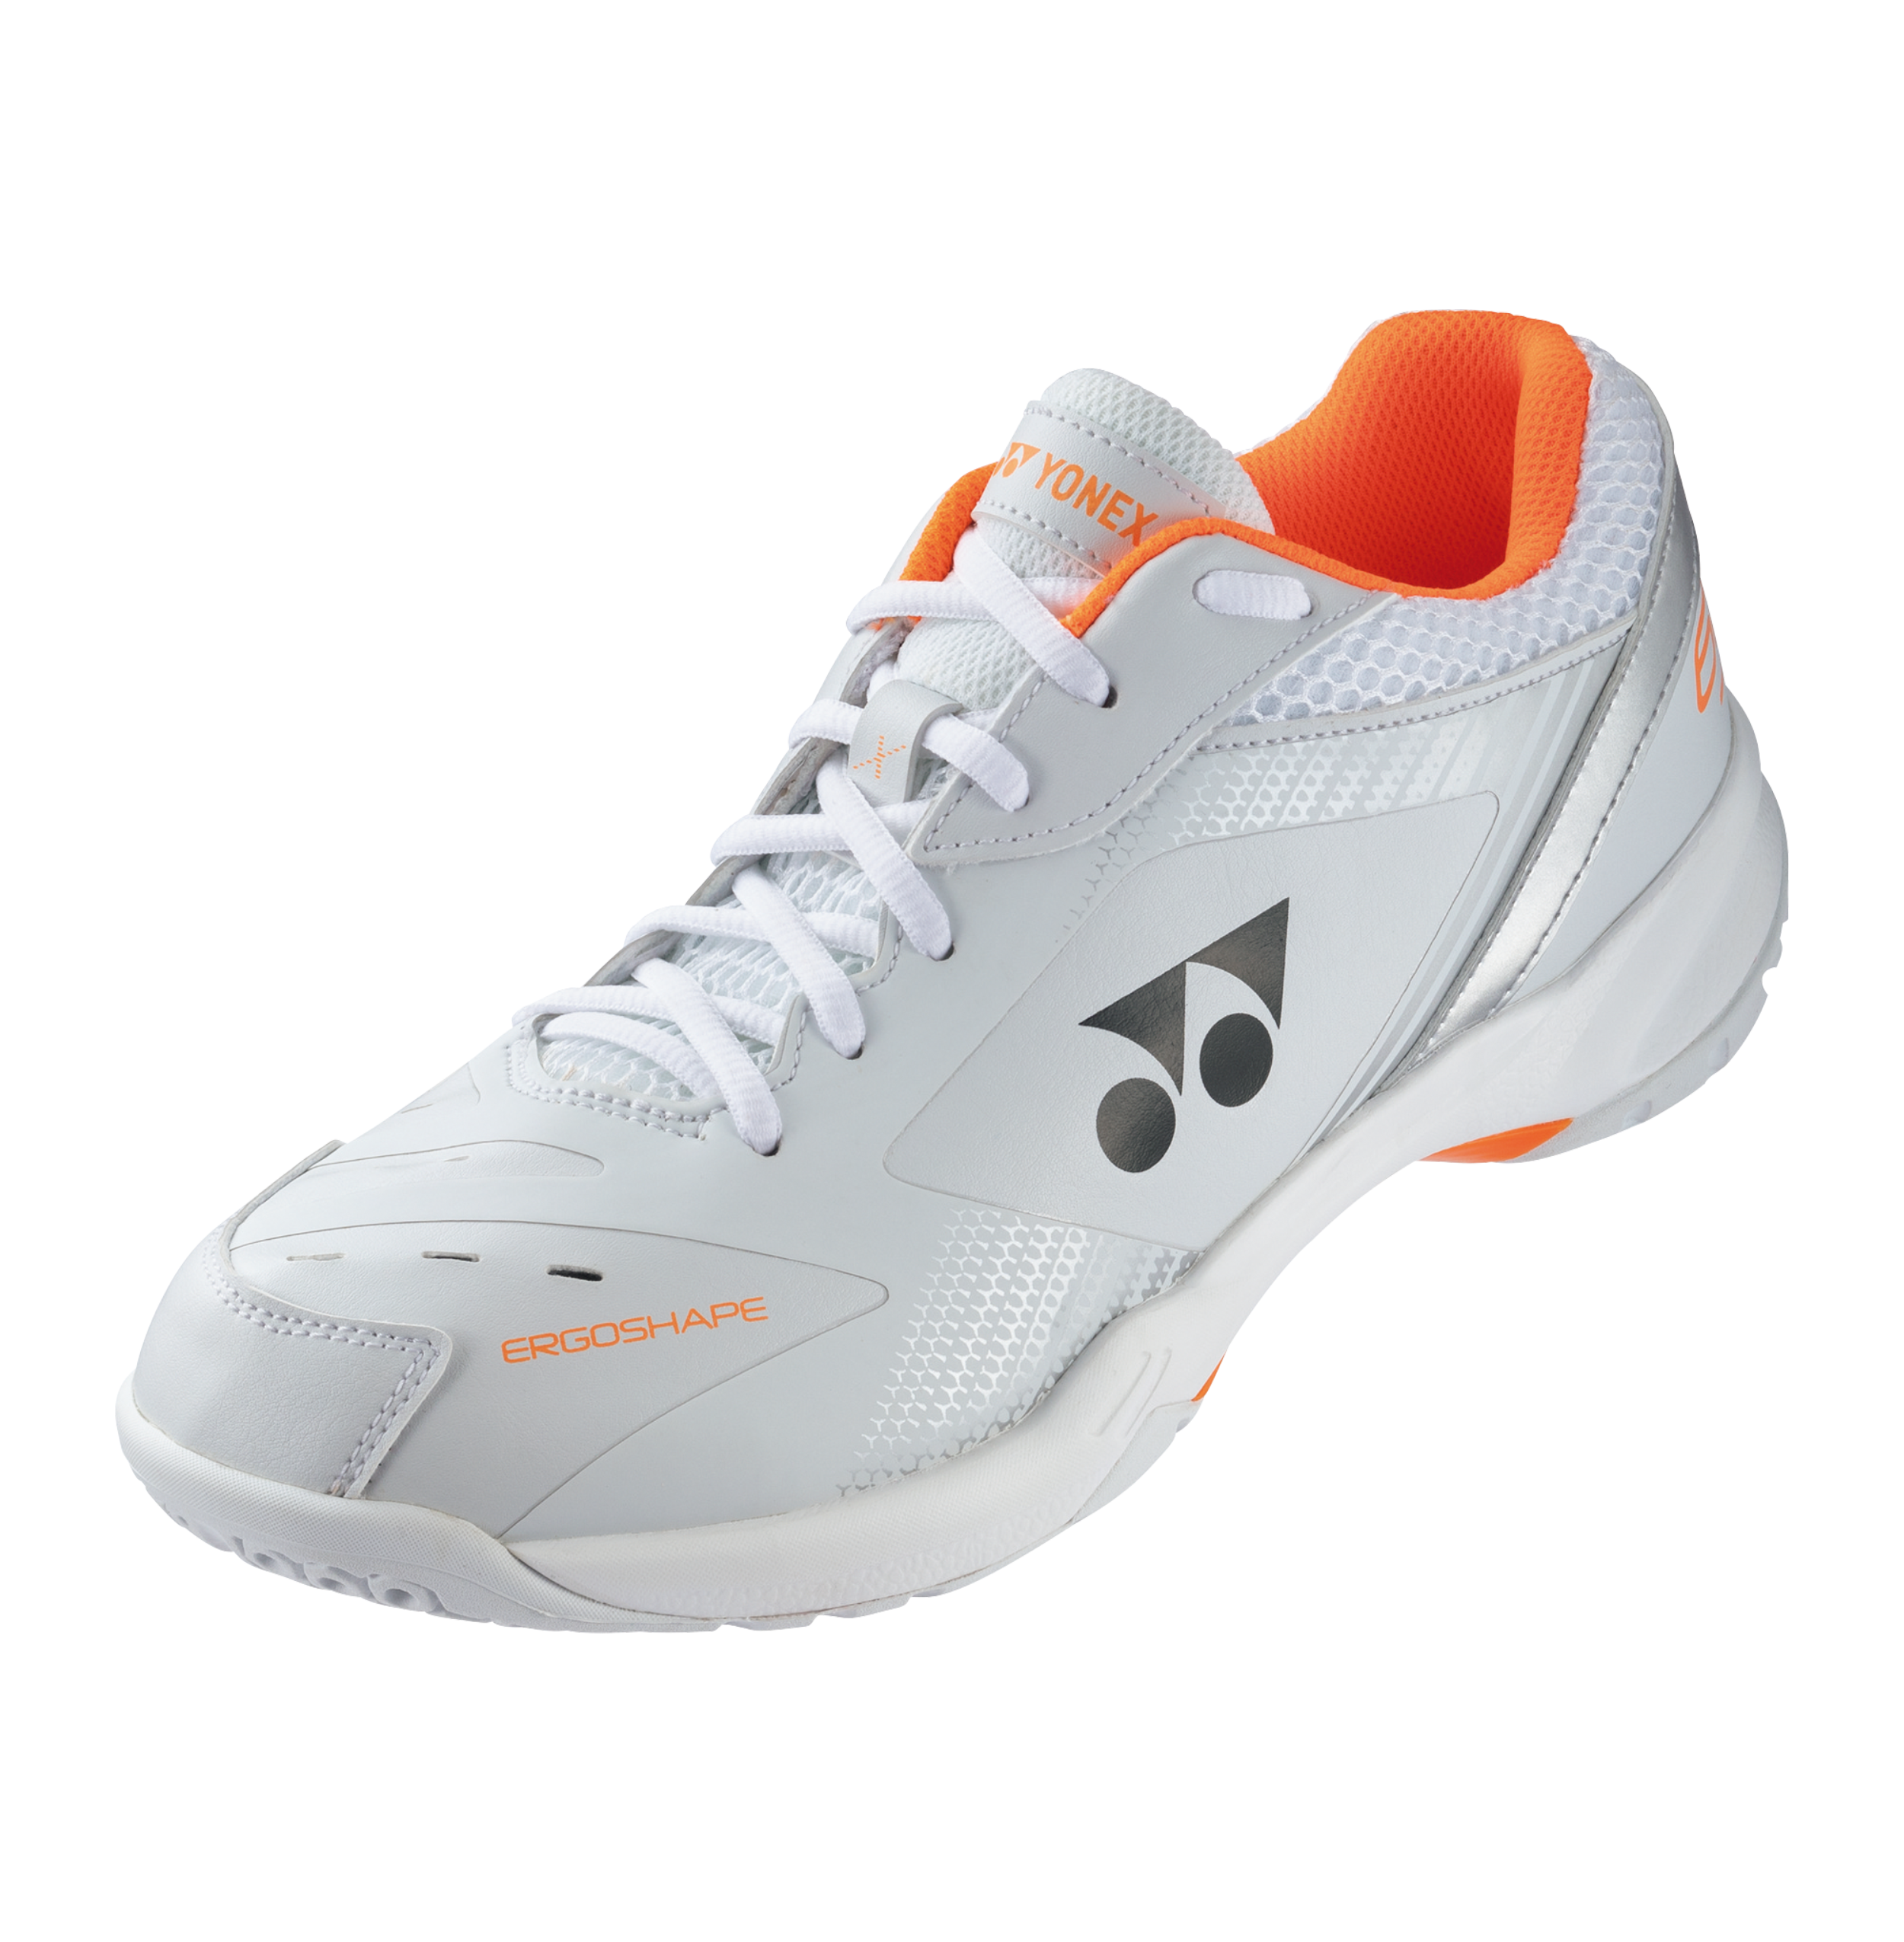 Yonex Power Cushion Badminton Squash Indoor Shoes SHB65X3 Unisex - White/Orange